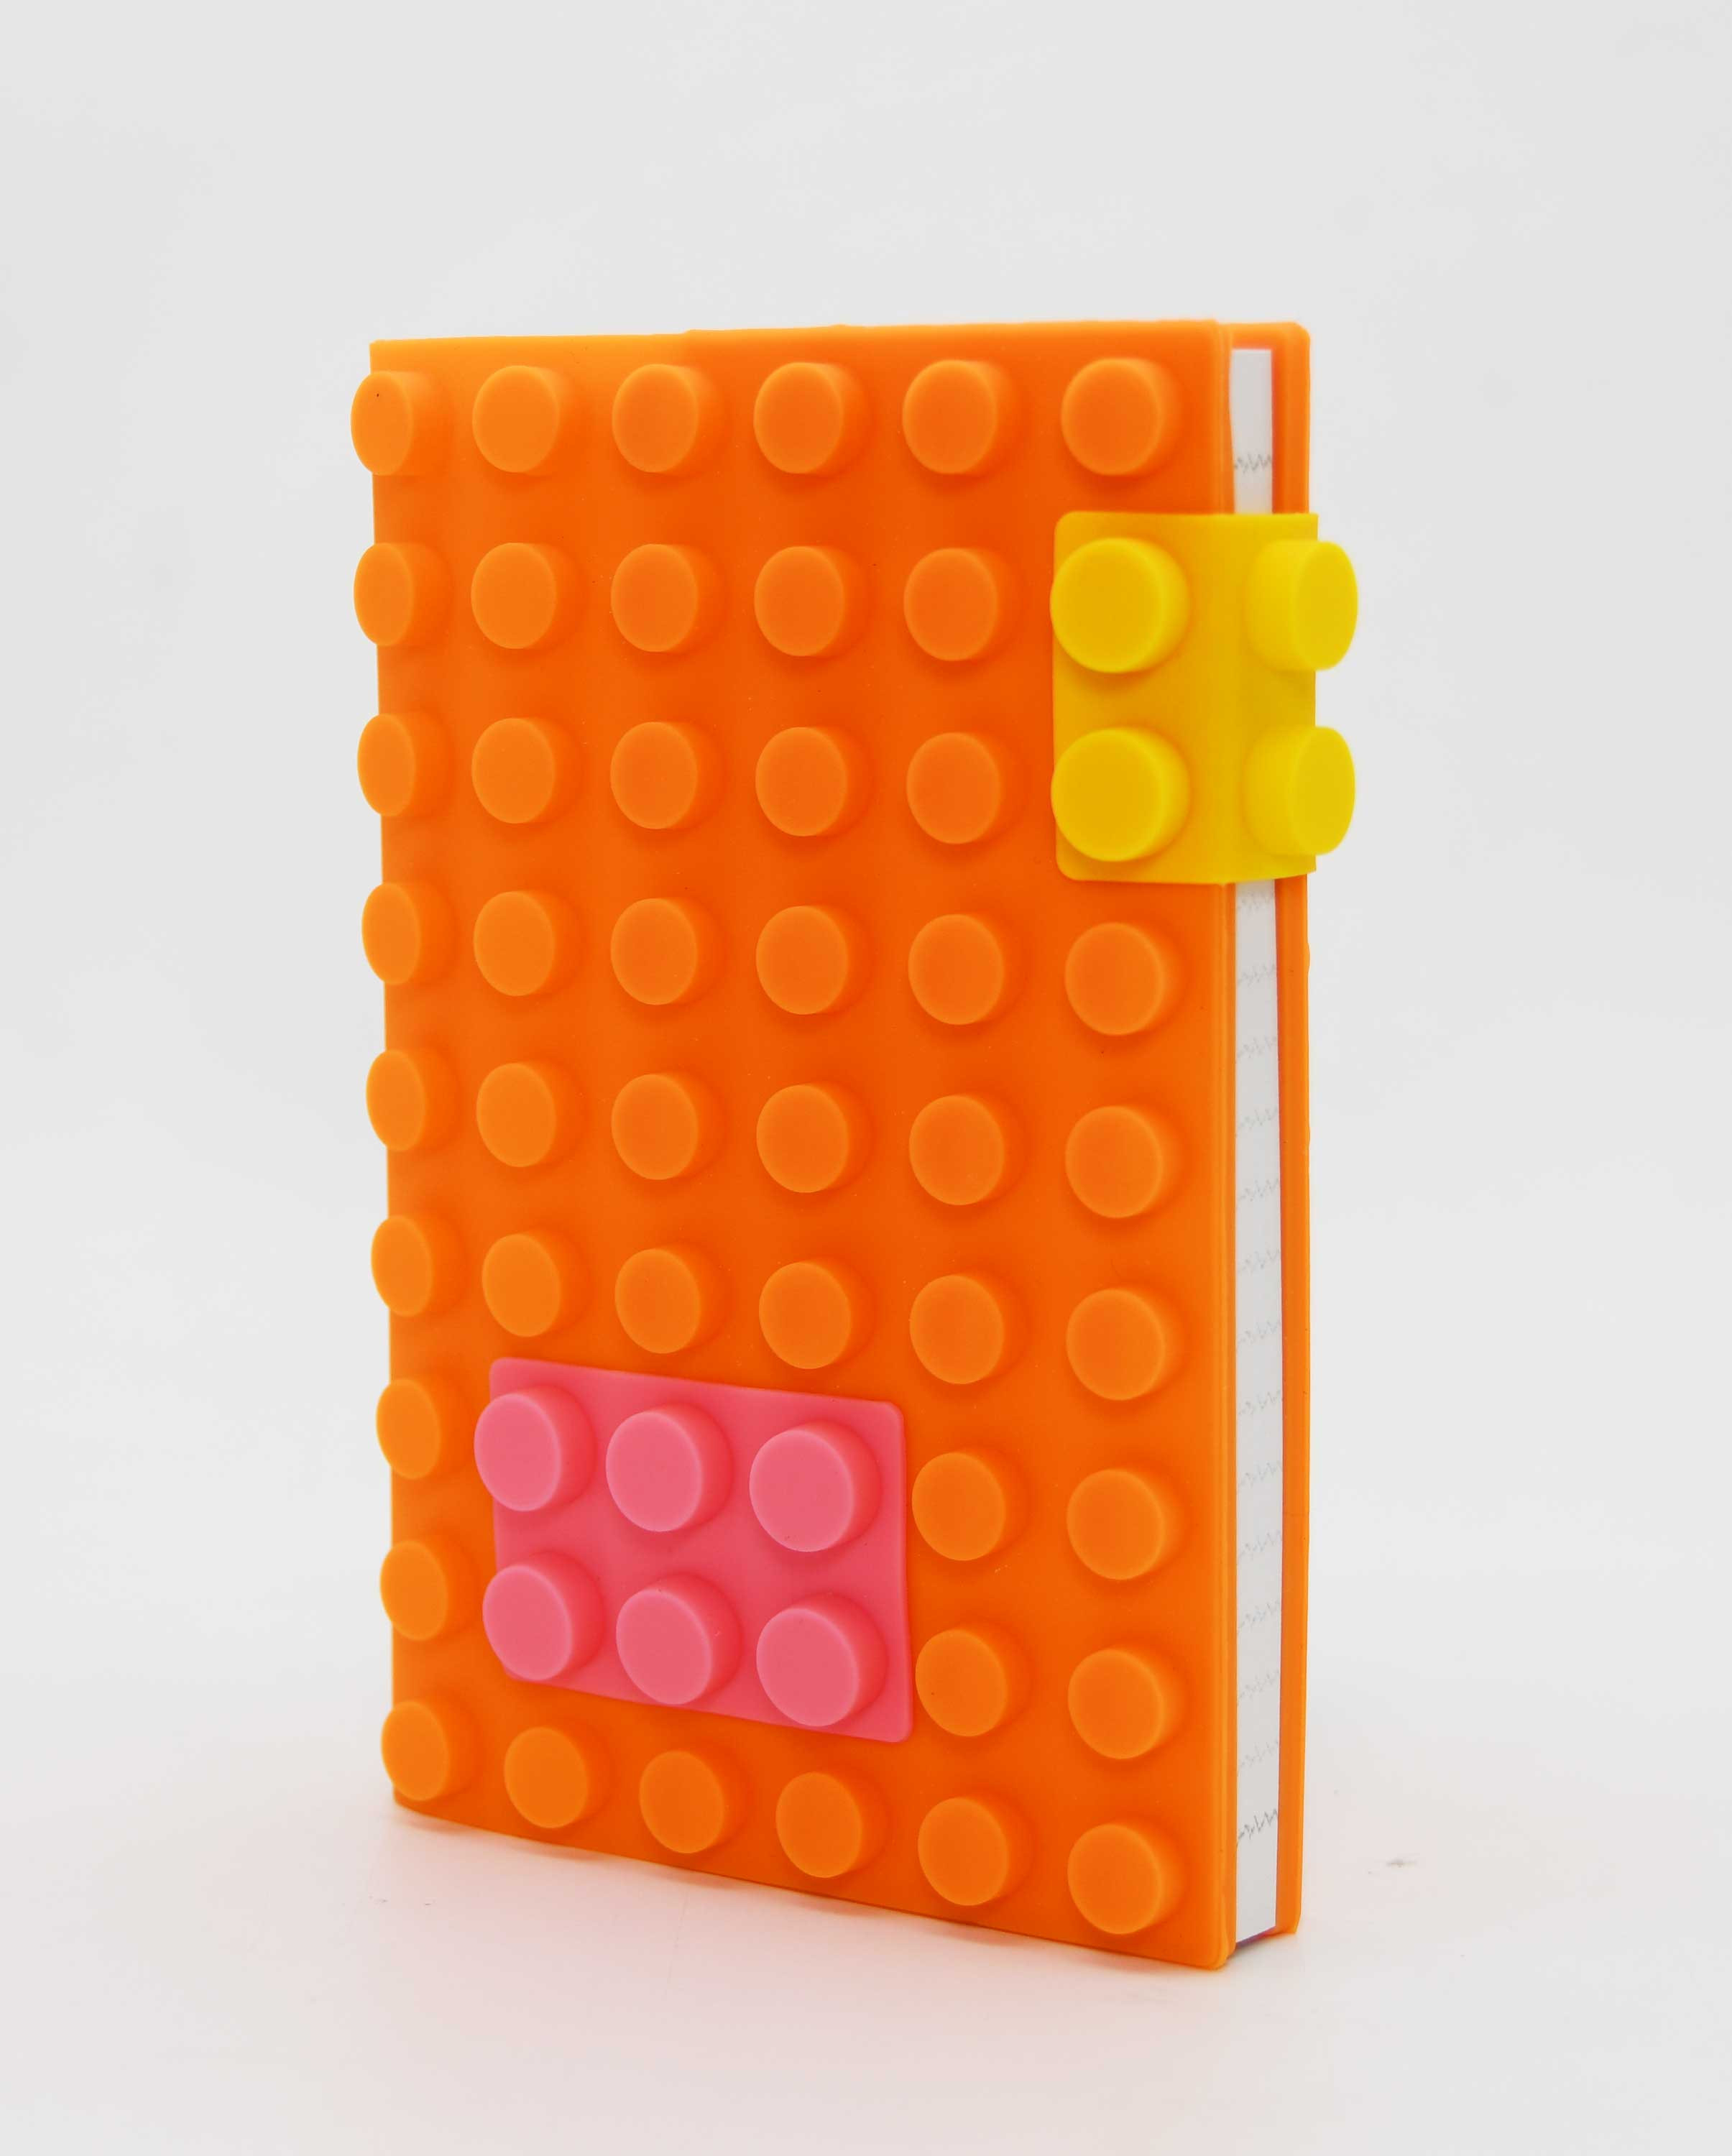 Imagen Note Book Lego 4